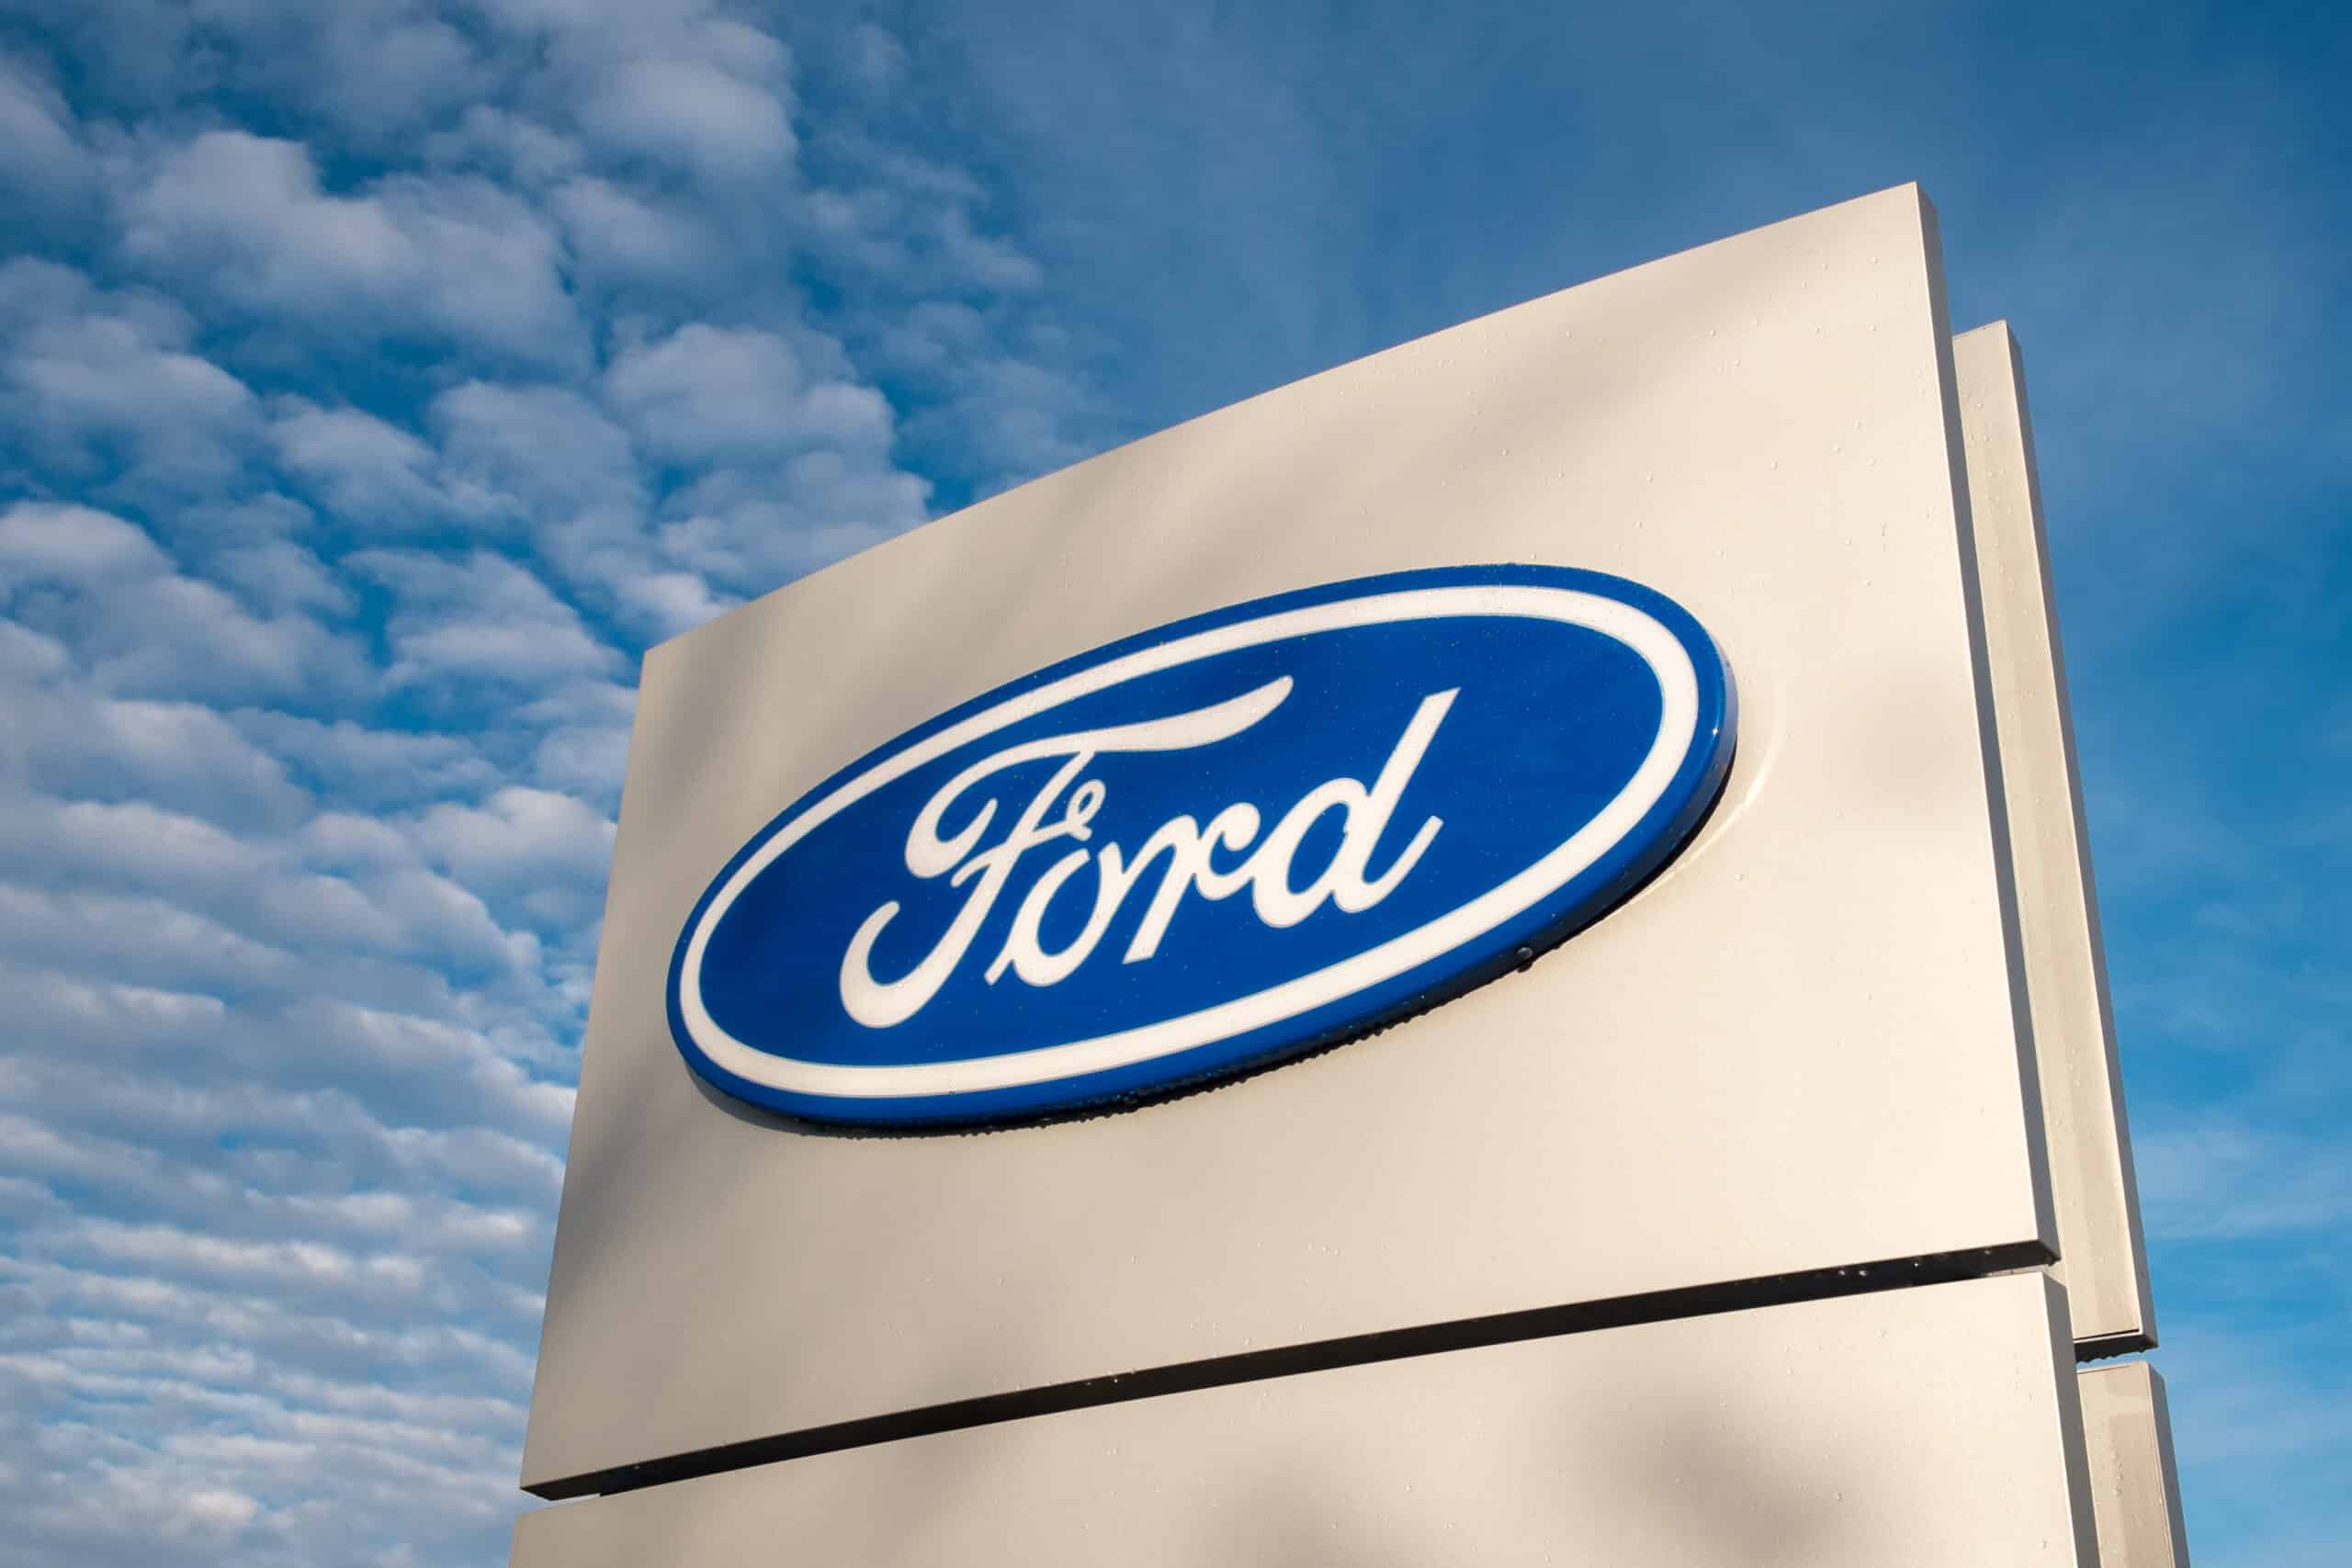 Ford motor company logo at a car dealership